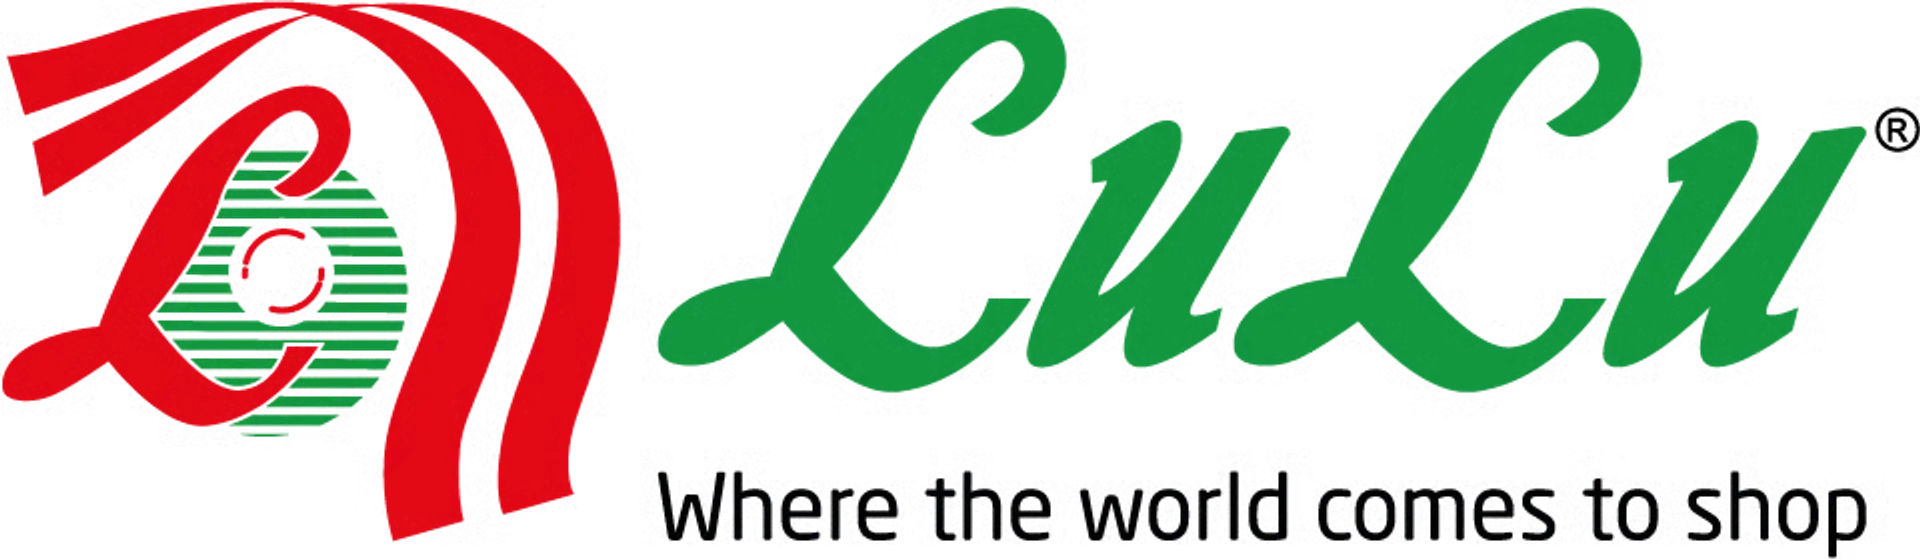 LULU HYPERMARKET logo. Current weekly ad